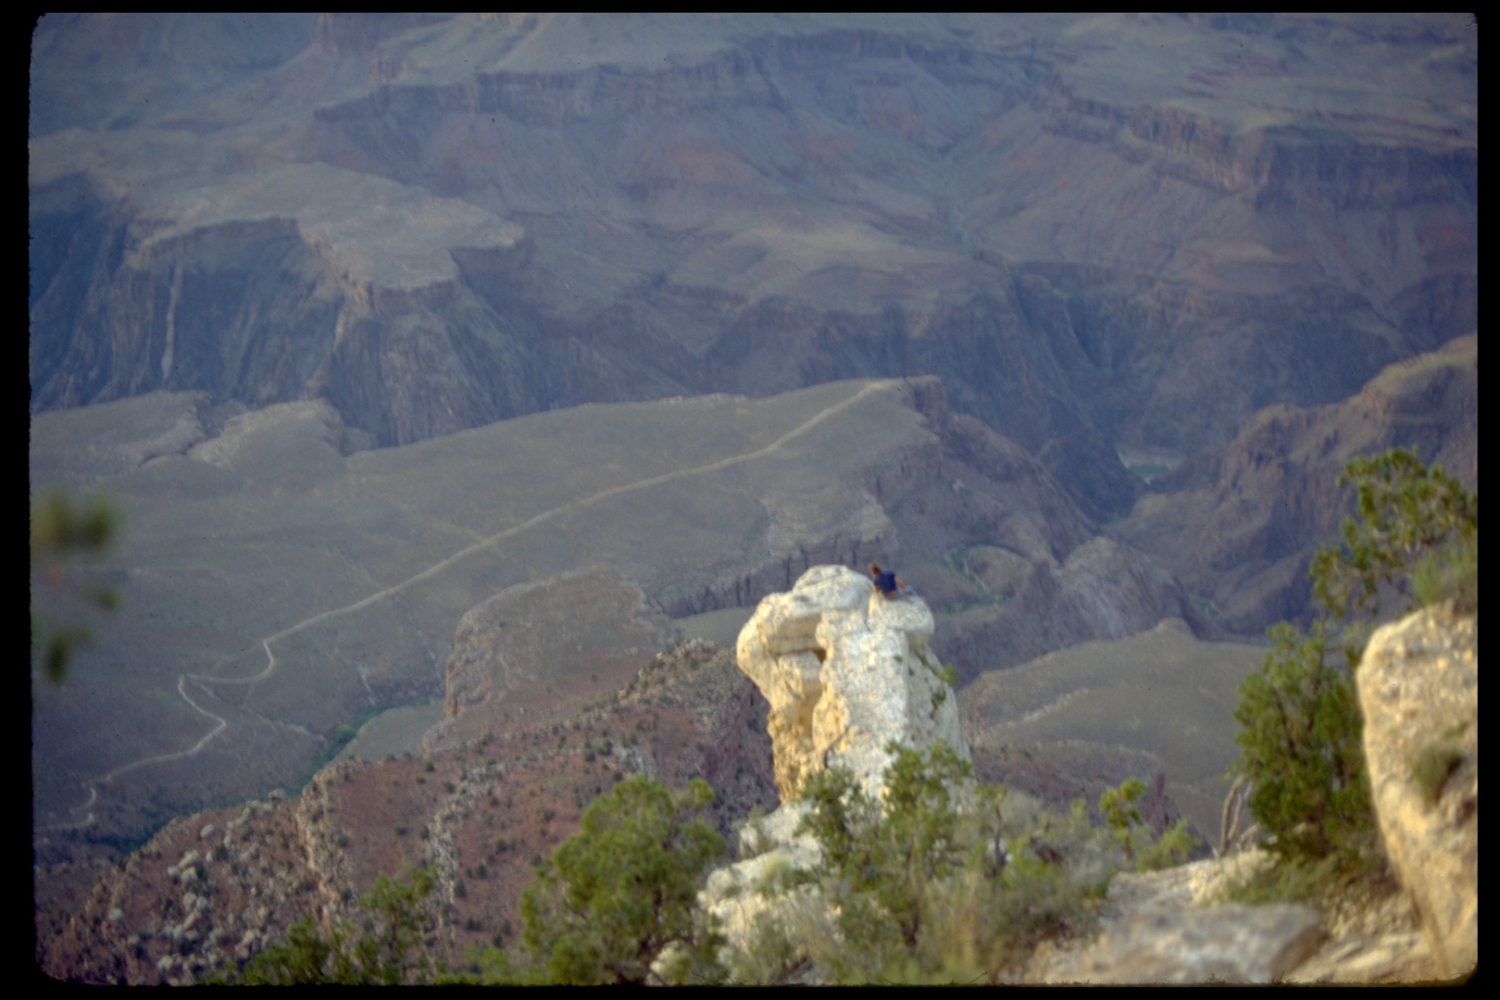 Steve Hoy at the Grand Canyon 1980